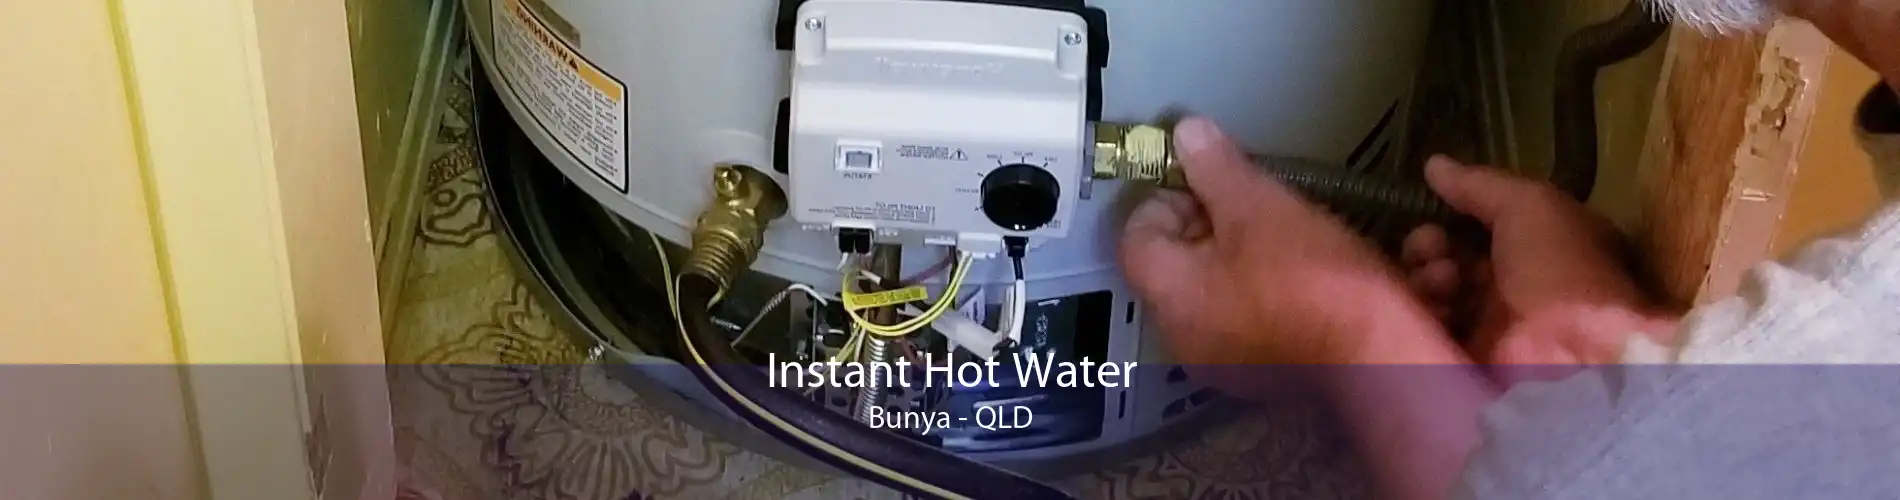 Instant Hot Water Bunya - QLD